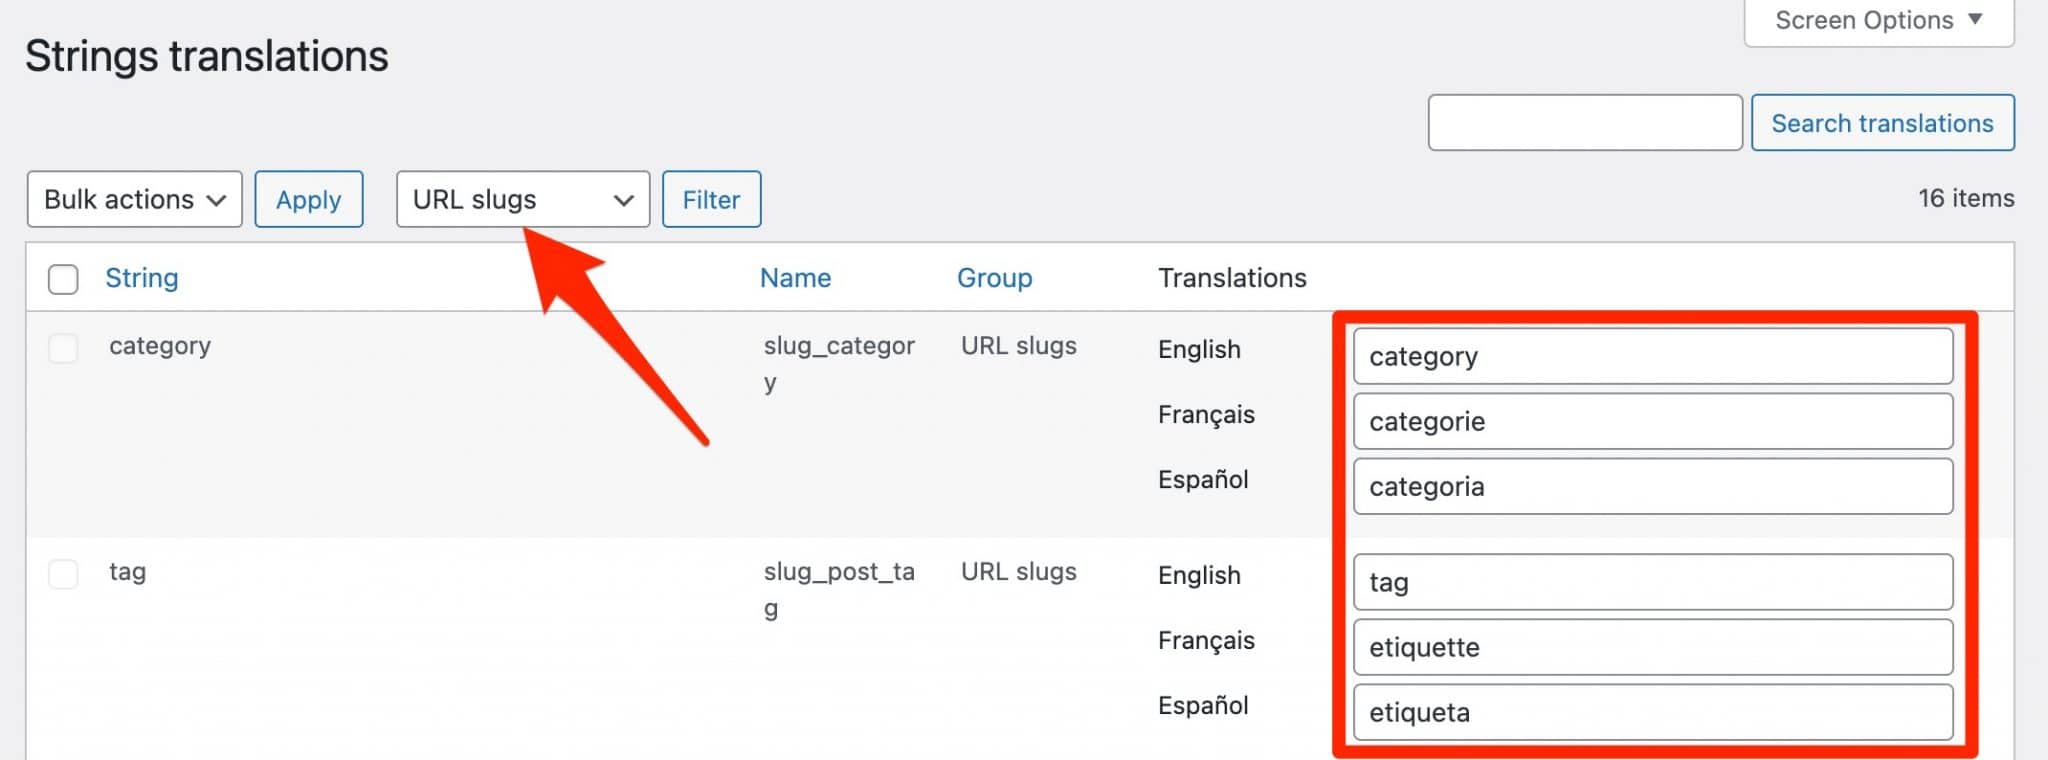 Strings translations settings to translate the URL slugs on Polylang.